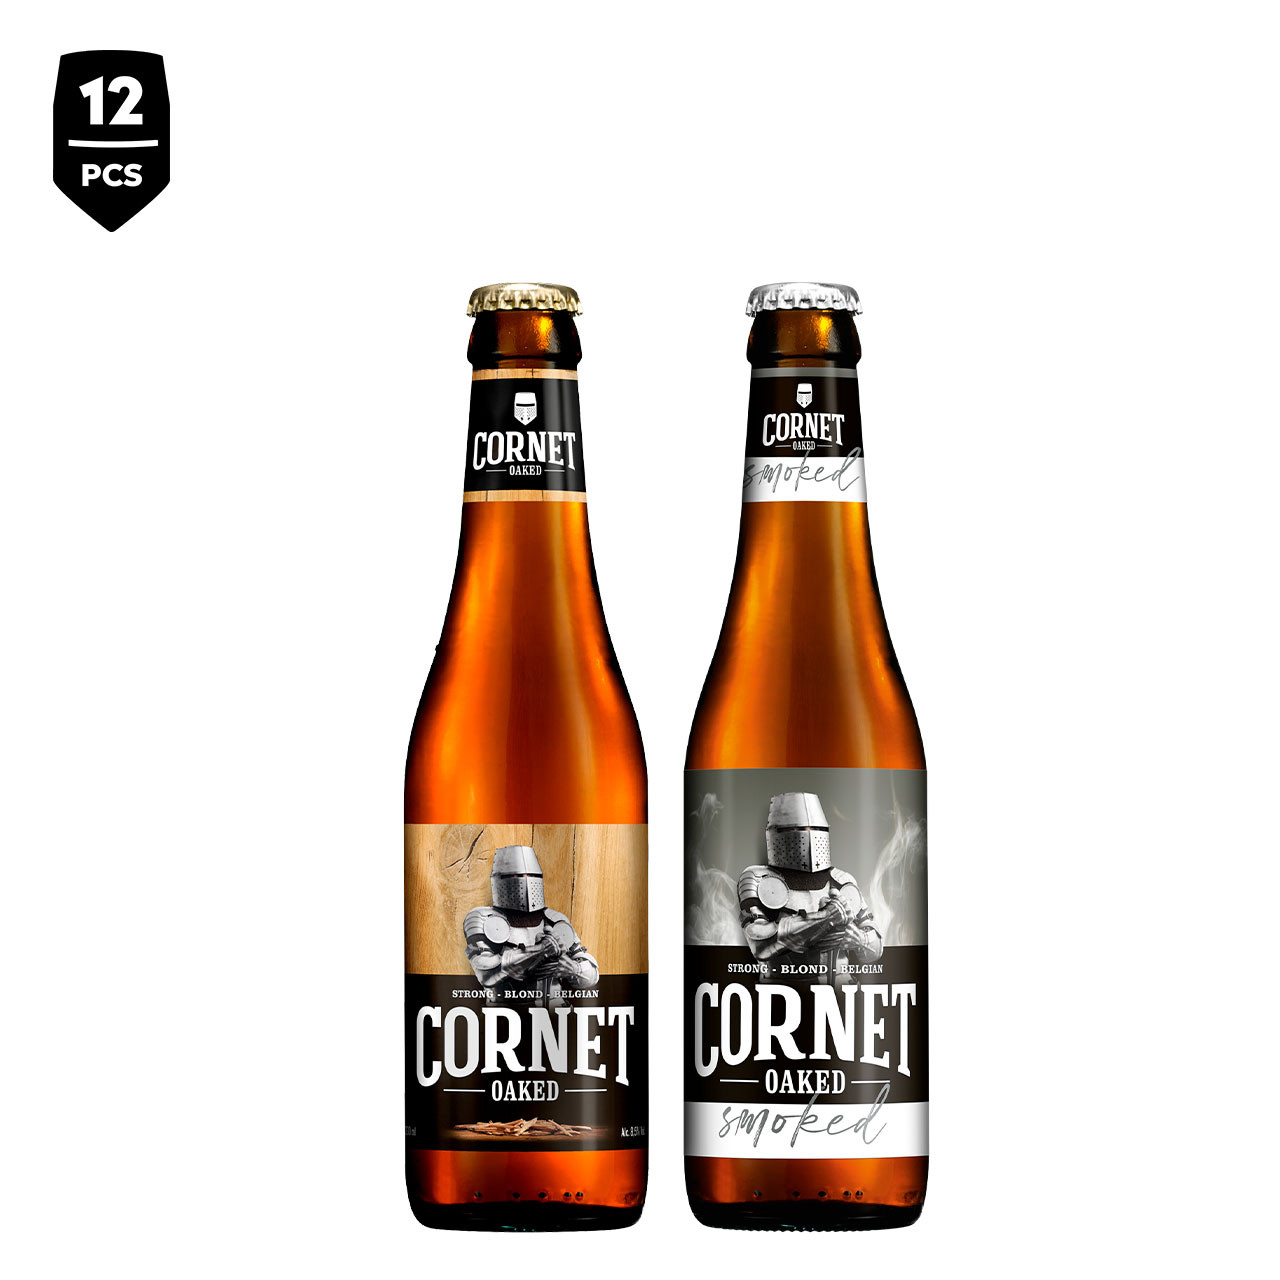 CORNET Oaked & CORNET Smoked Brouwerijpakket 12-pack